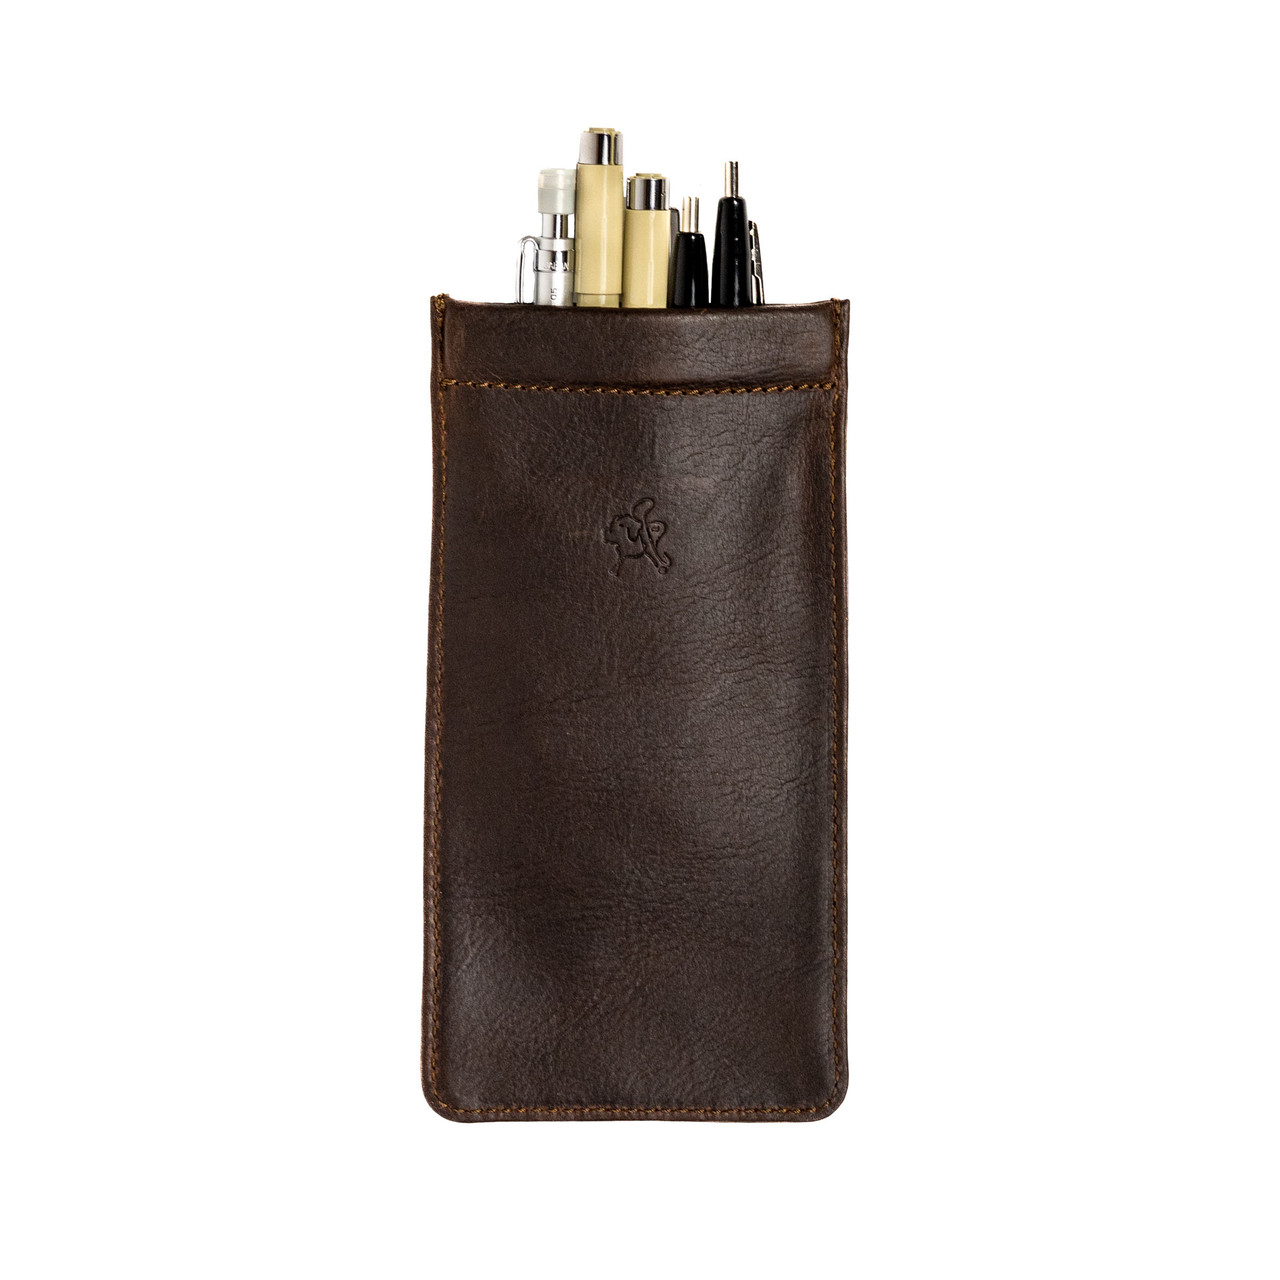 Leather bag & pencil case